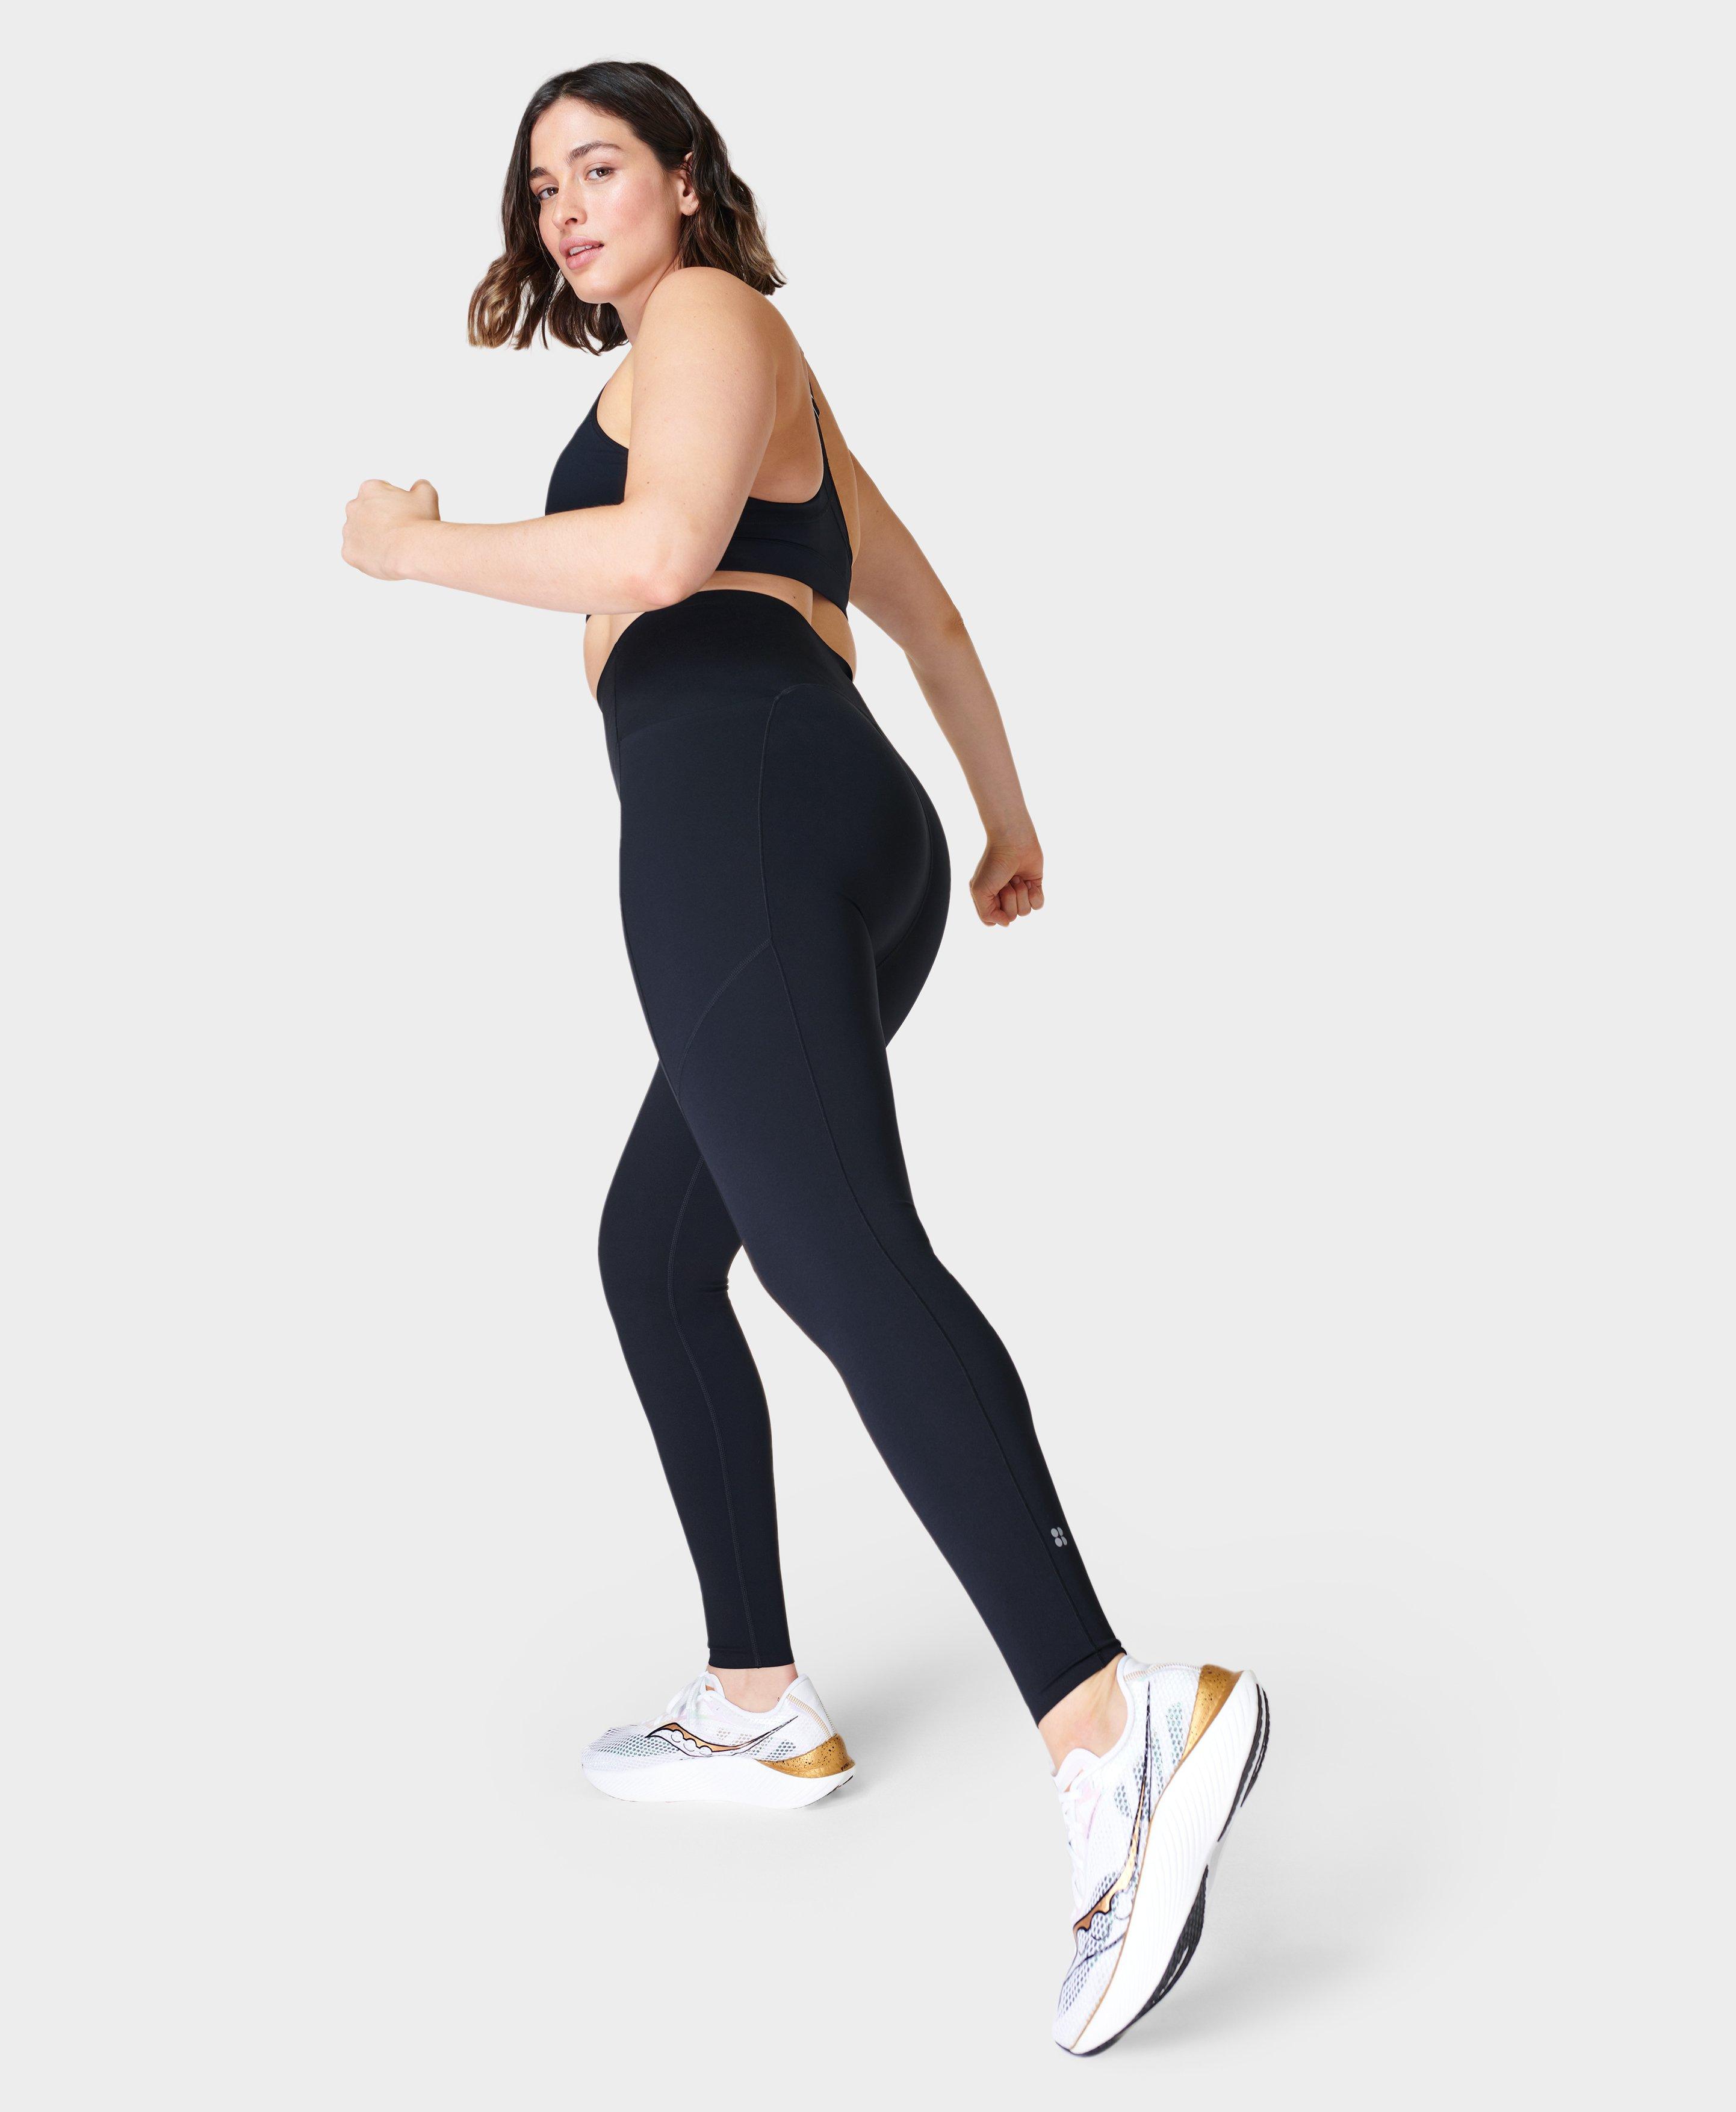 Piftif women's Running Full Length Tights Compression Lower Sport Leggings  Gym Fitness Sportswear Training Yoga Pants.